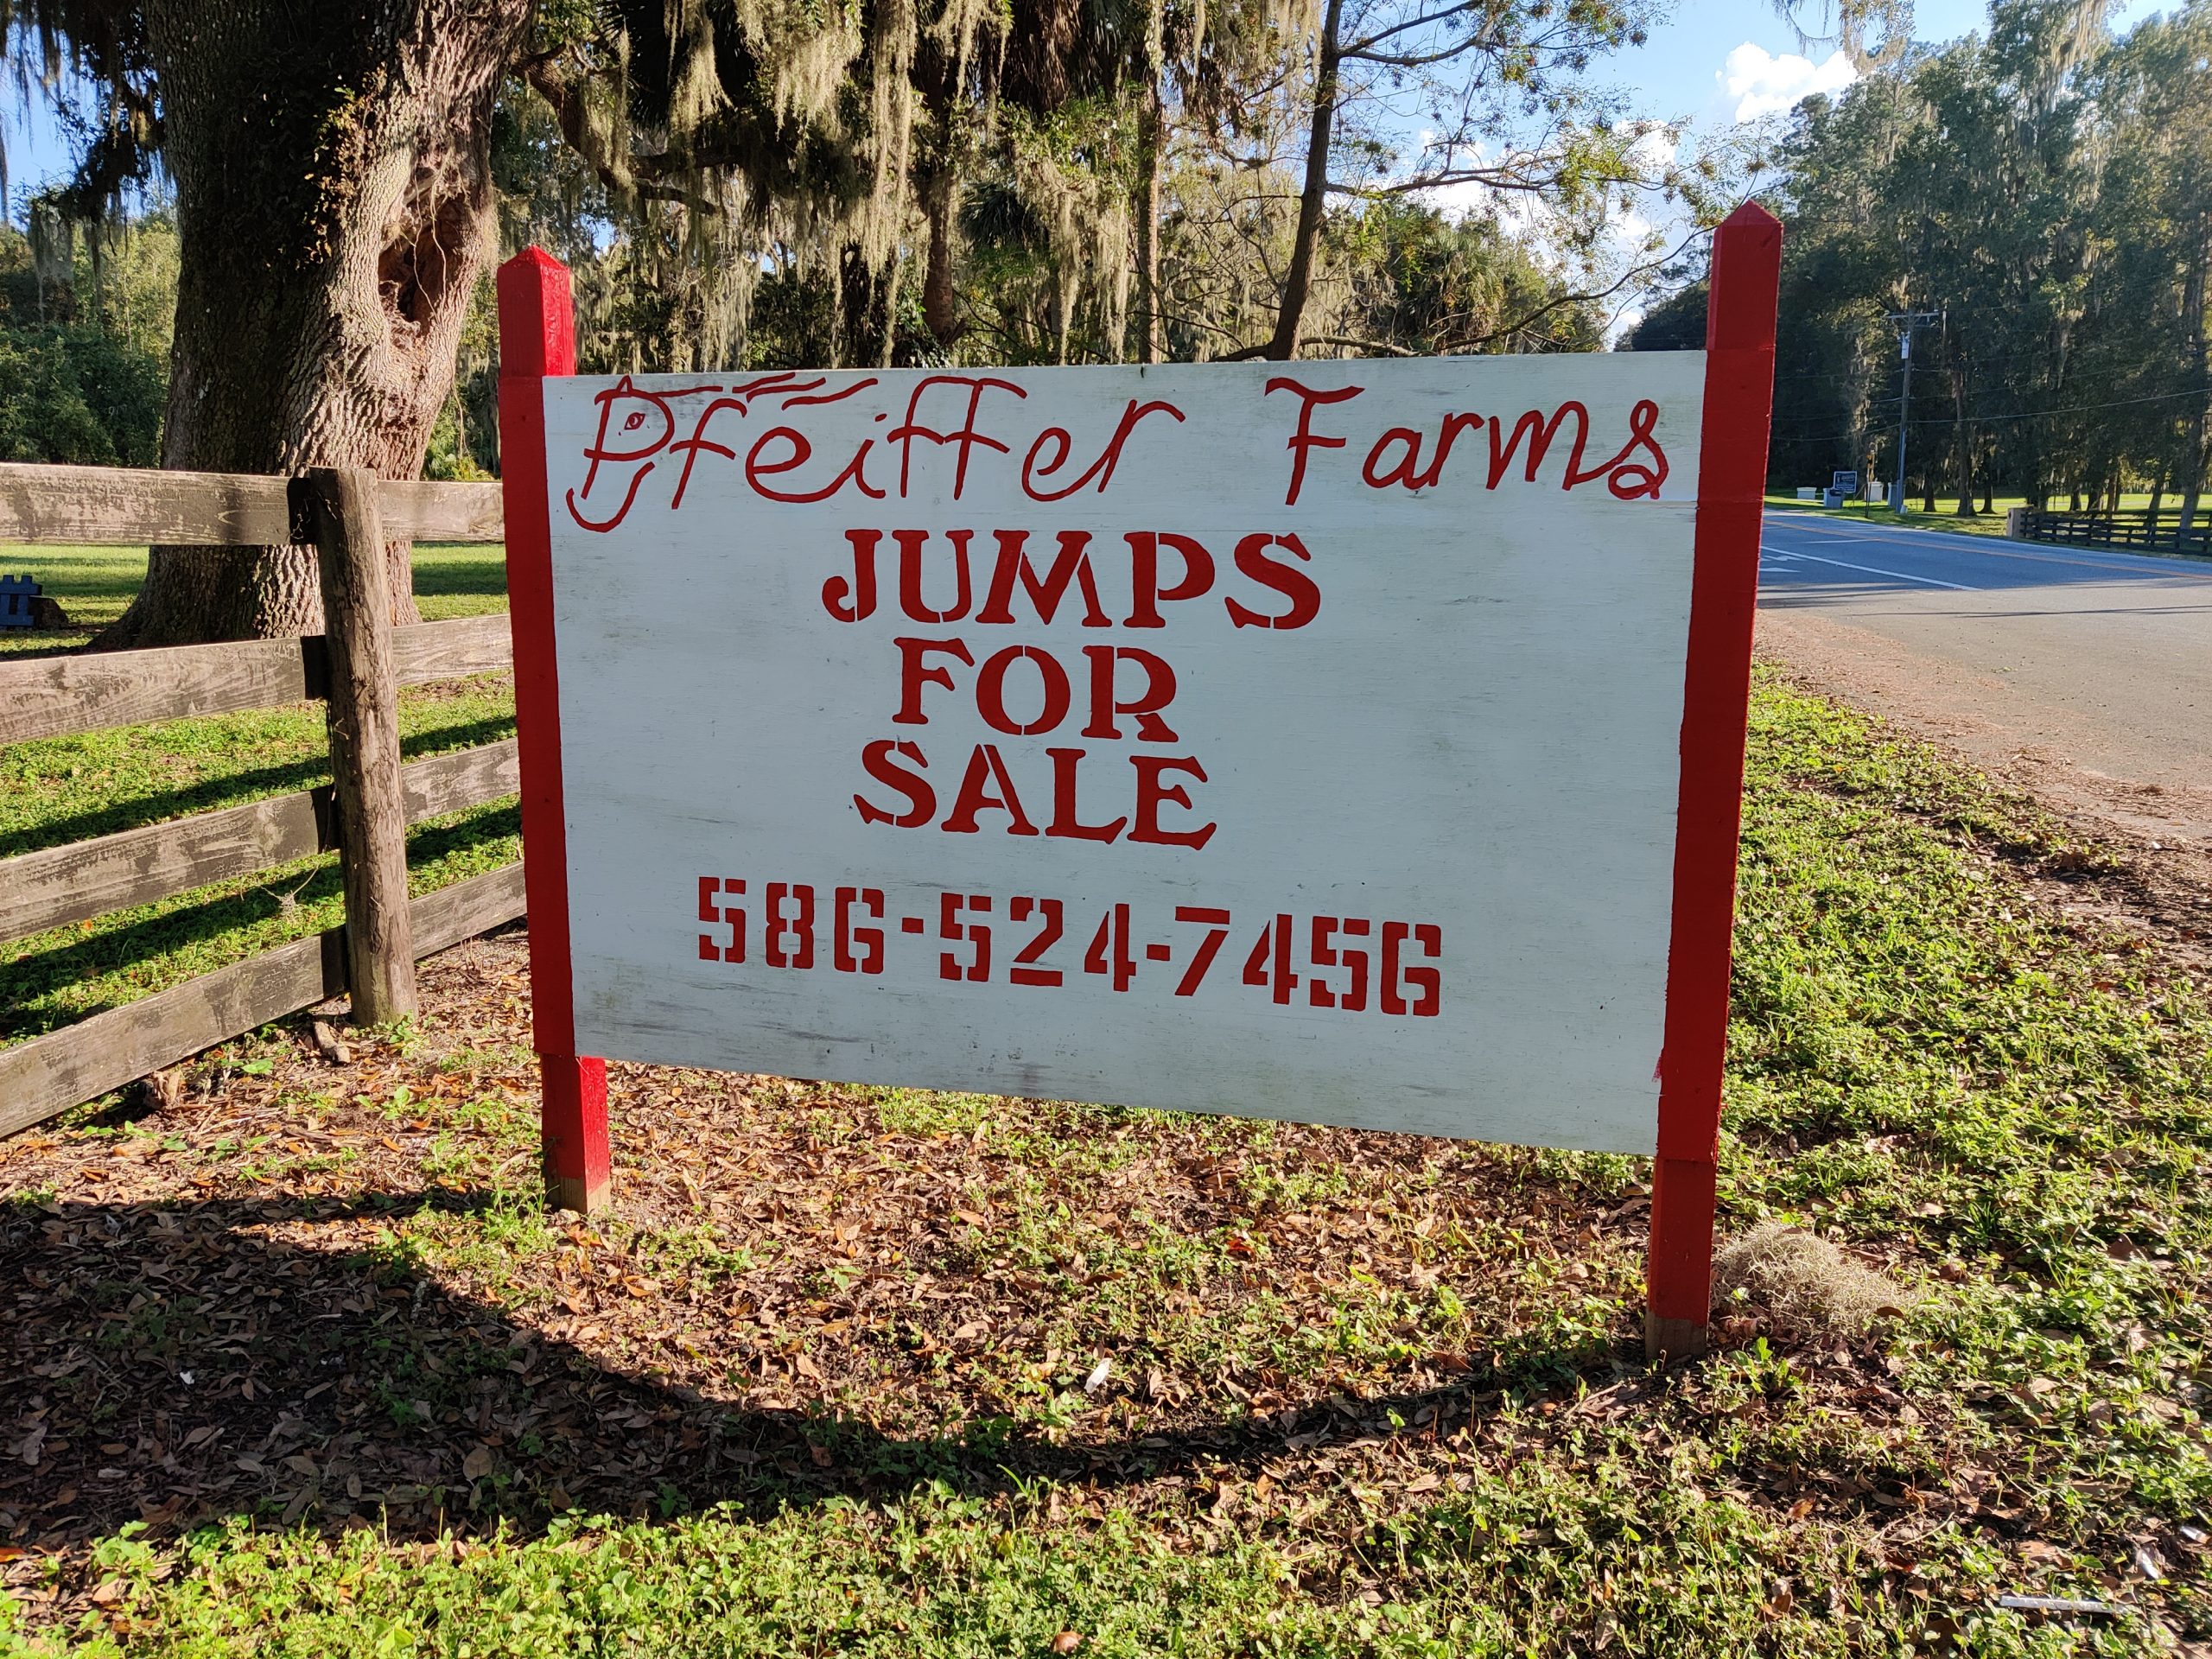 10-15-2020 Pfeffer Farms - Jumps For Sale